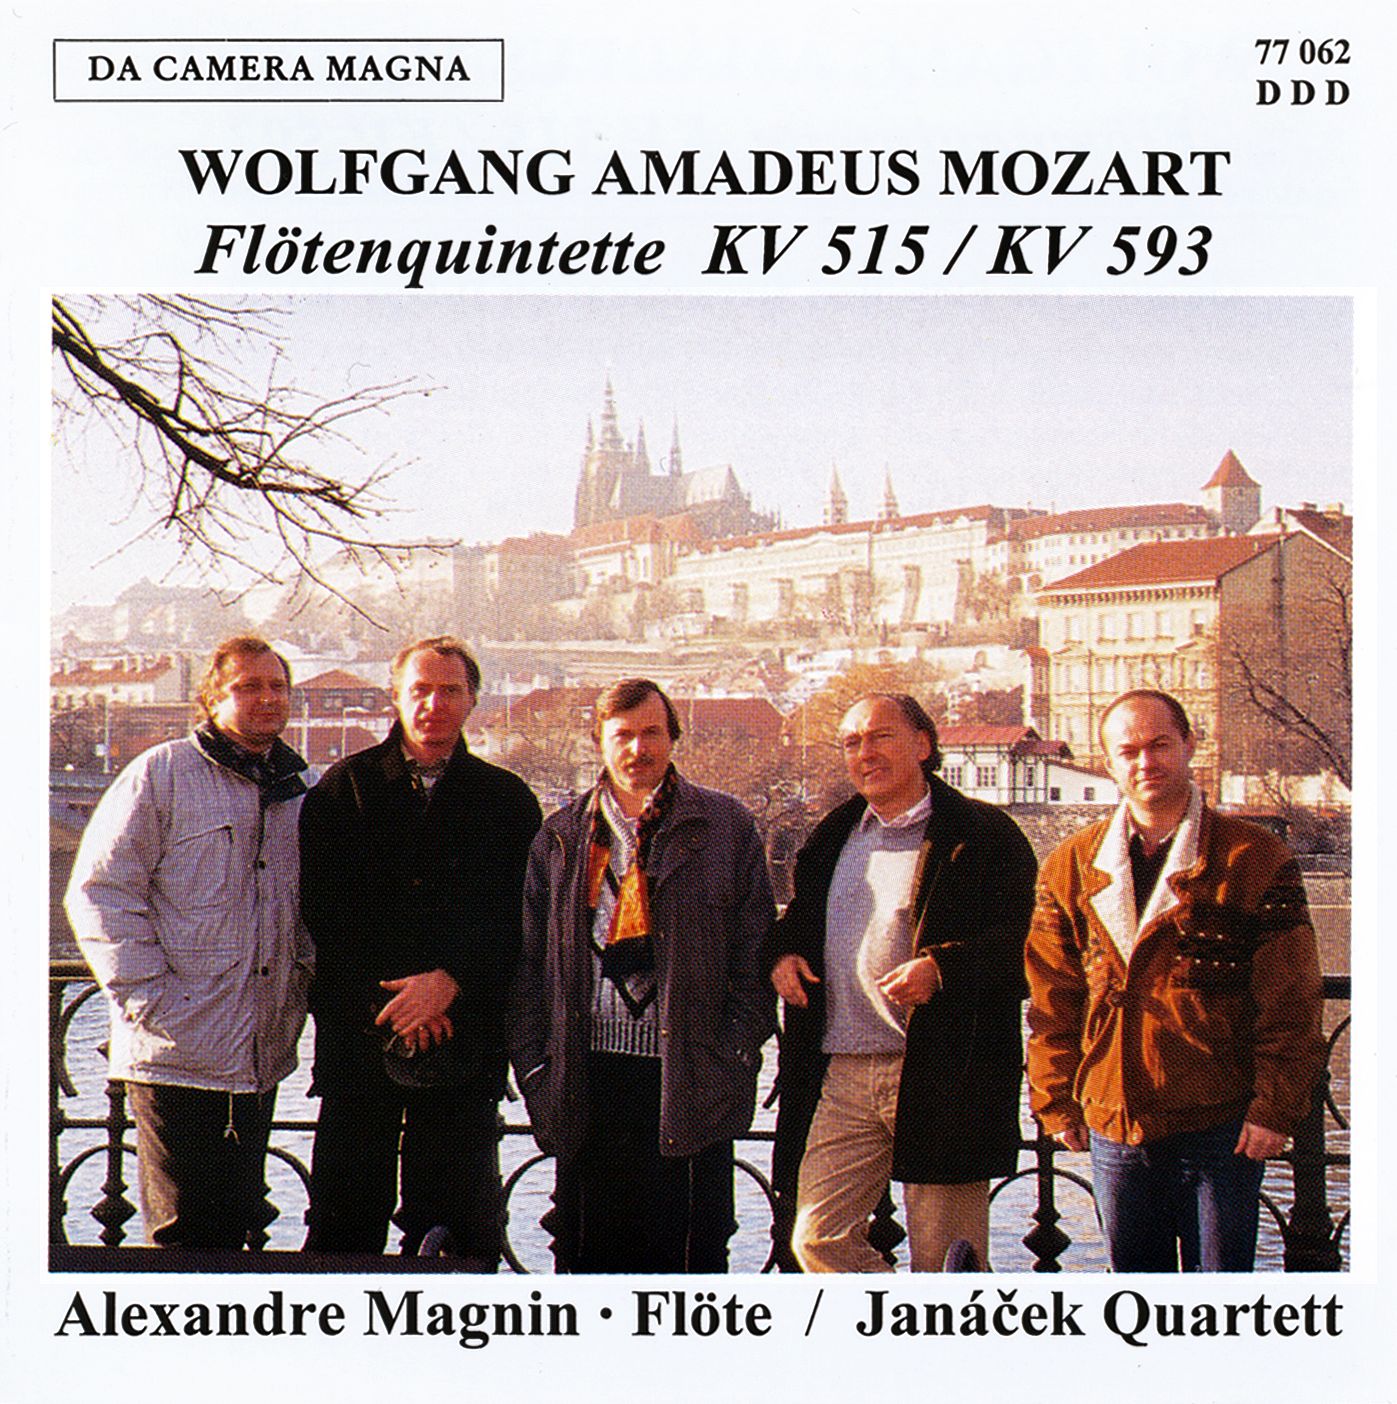 Wolfgang Amadeus Mozart - Flötenquintette KV 515 / KV 593